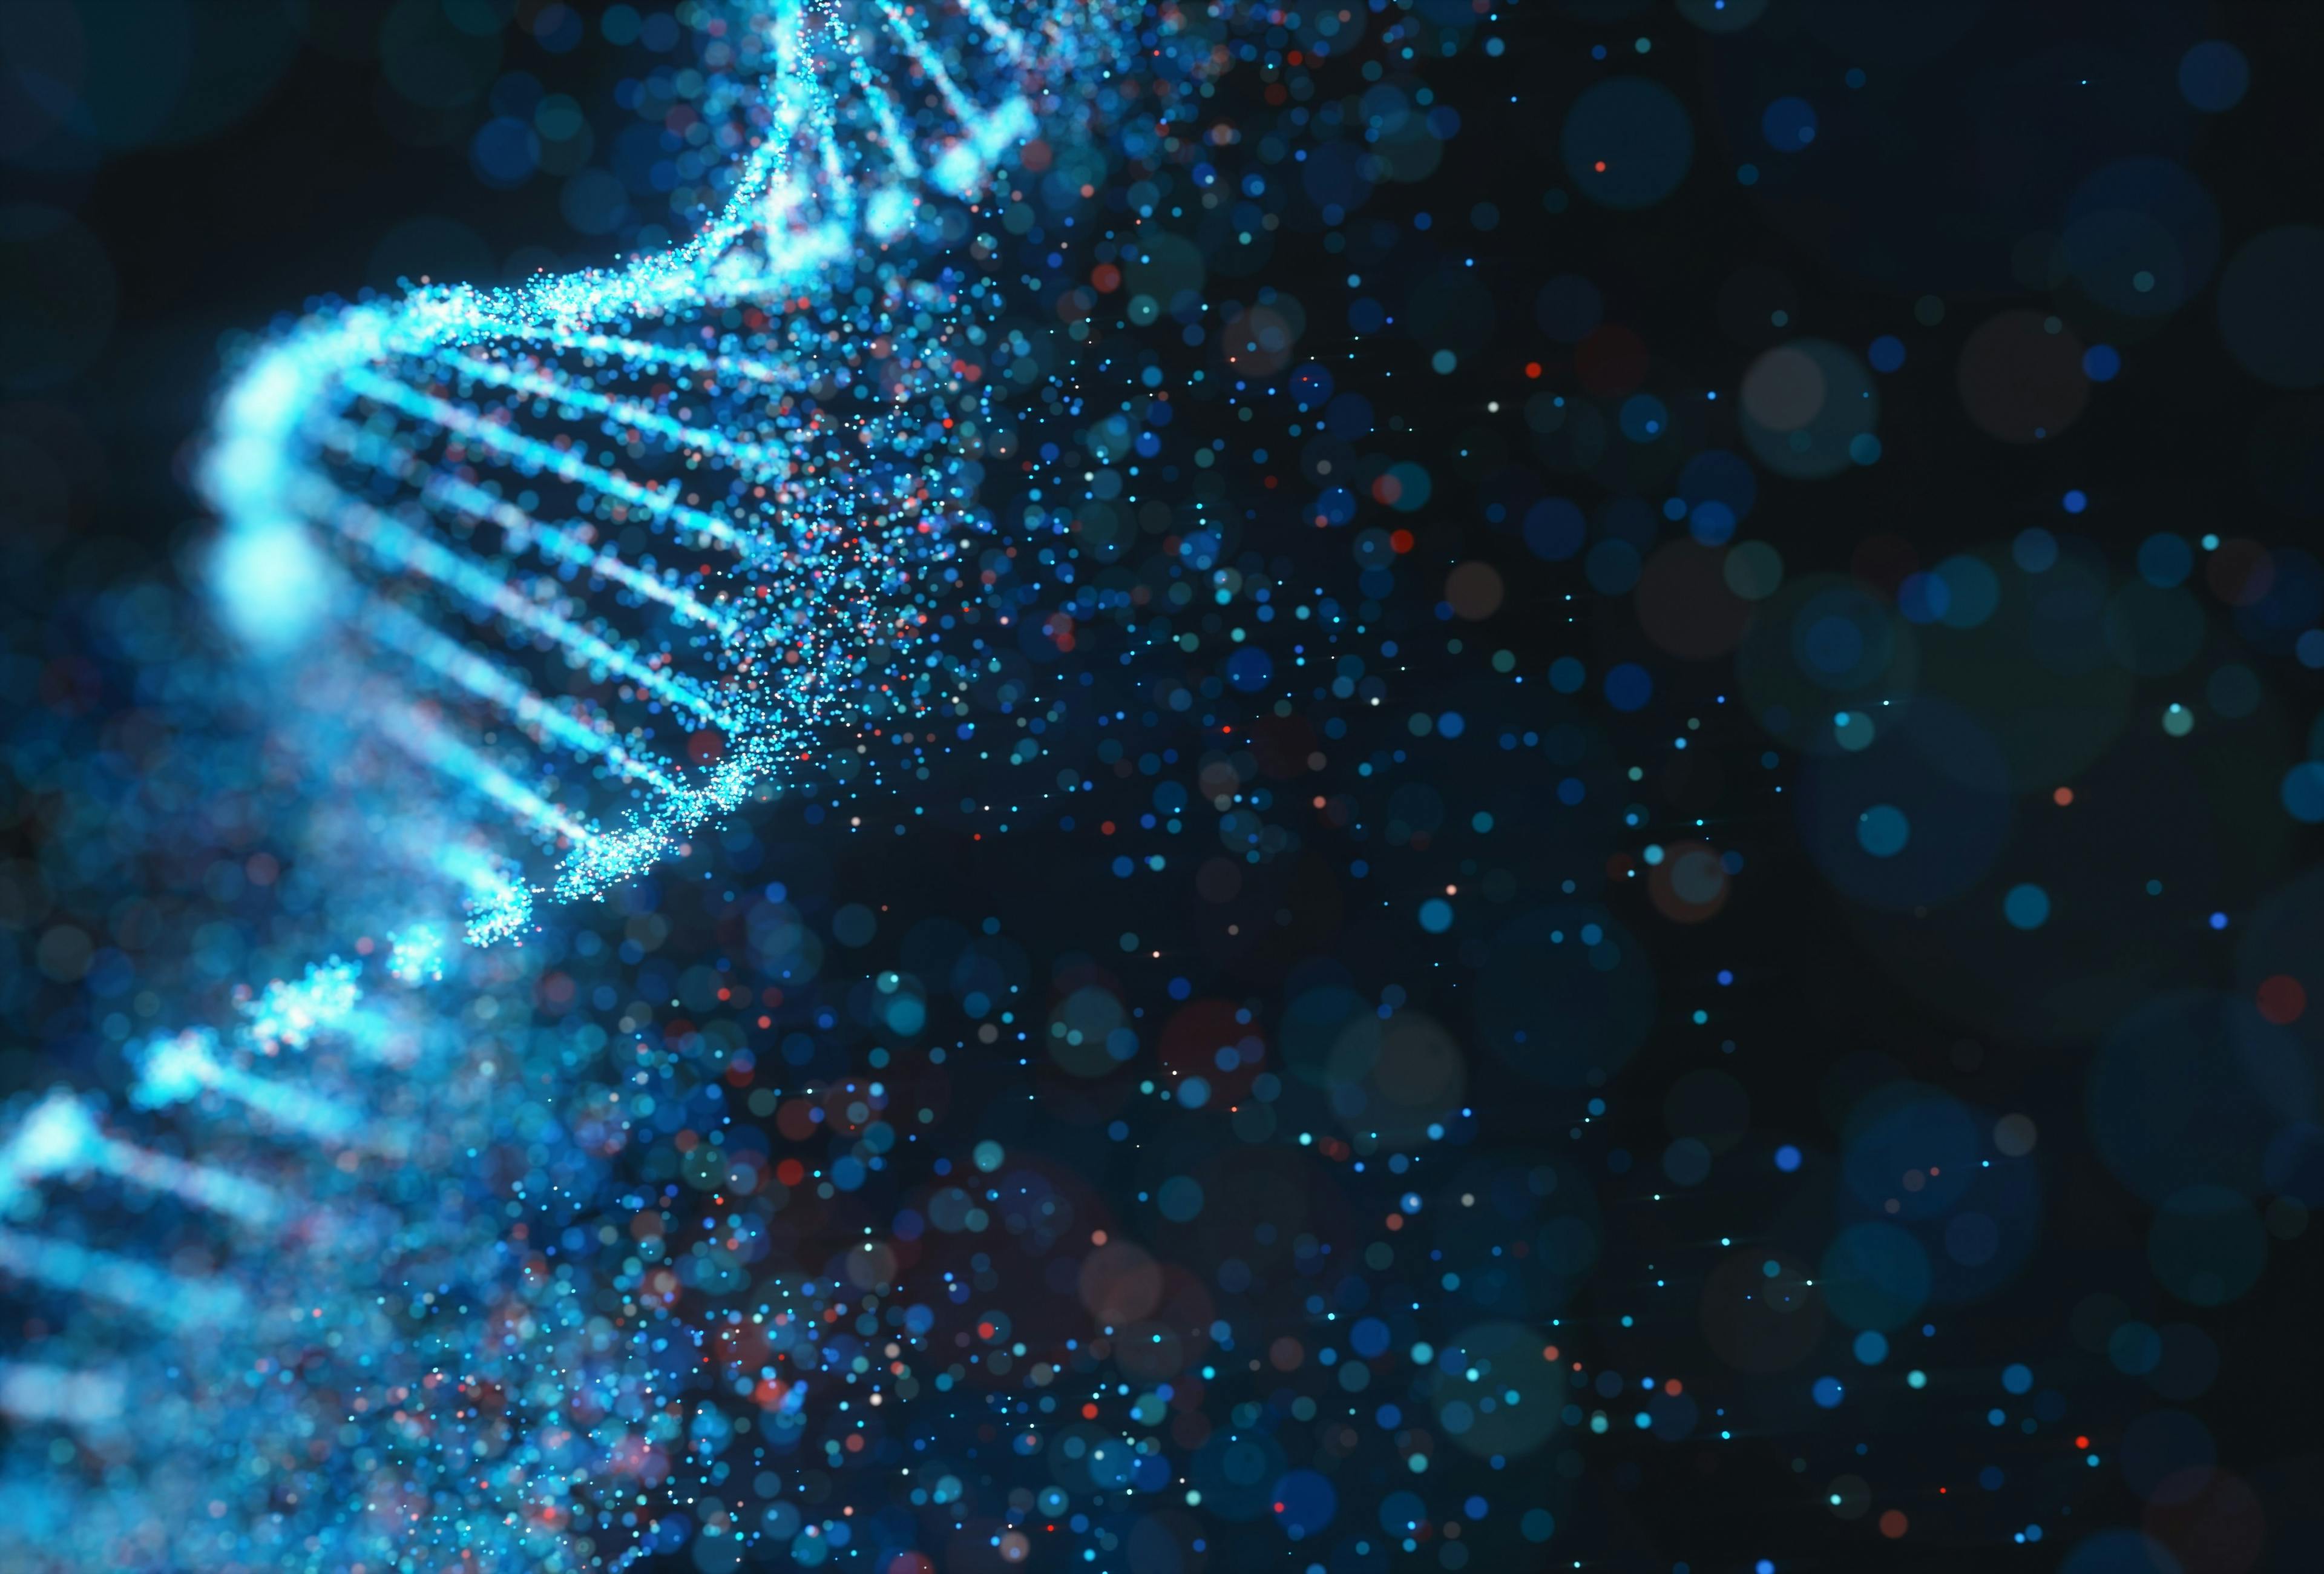 Colored Genetic Code DNA Molecule Structure: © ktsdesign - stock.adobe.com